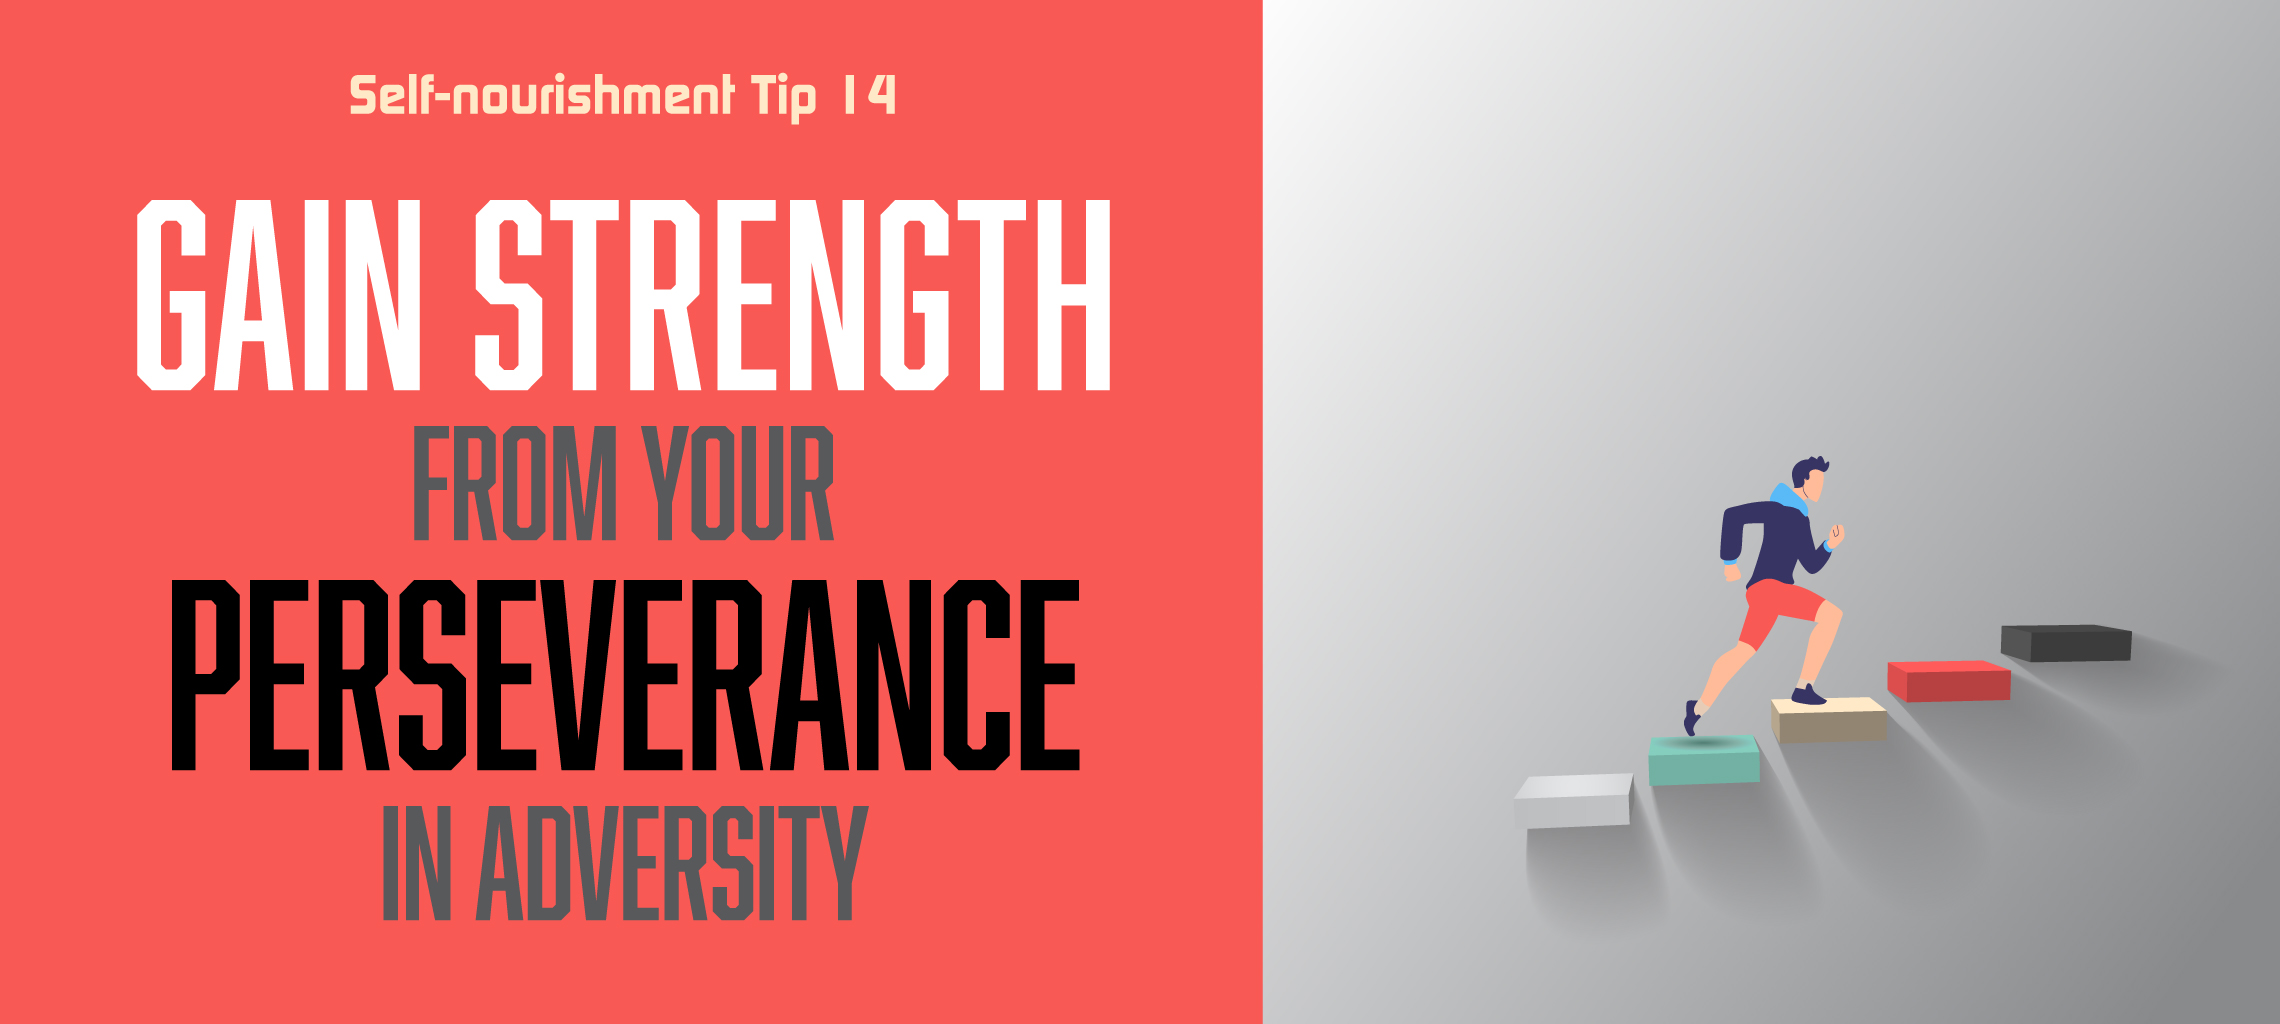 Tip14-strength-rev1